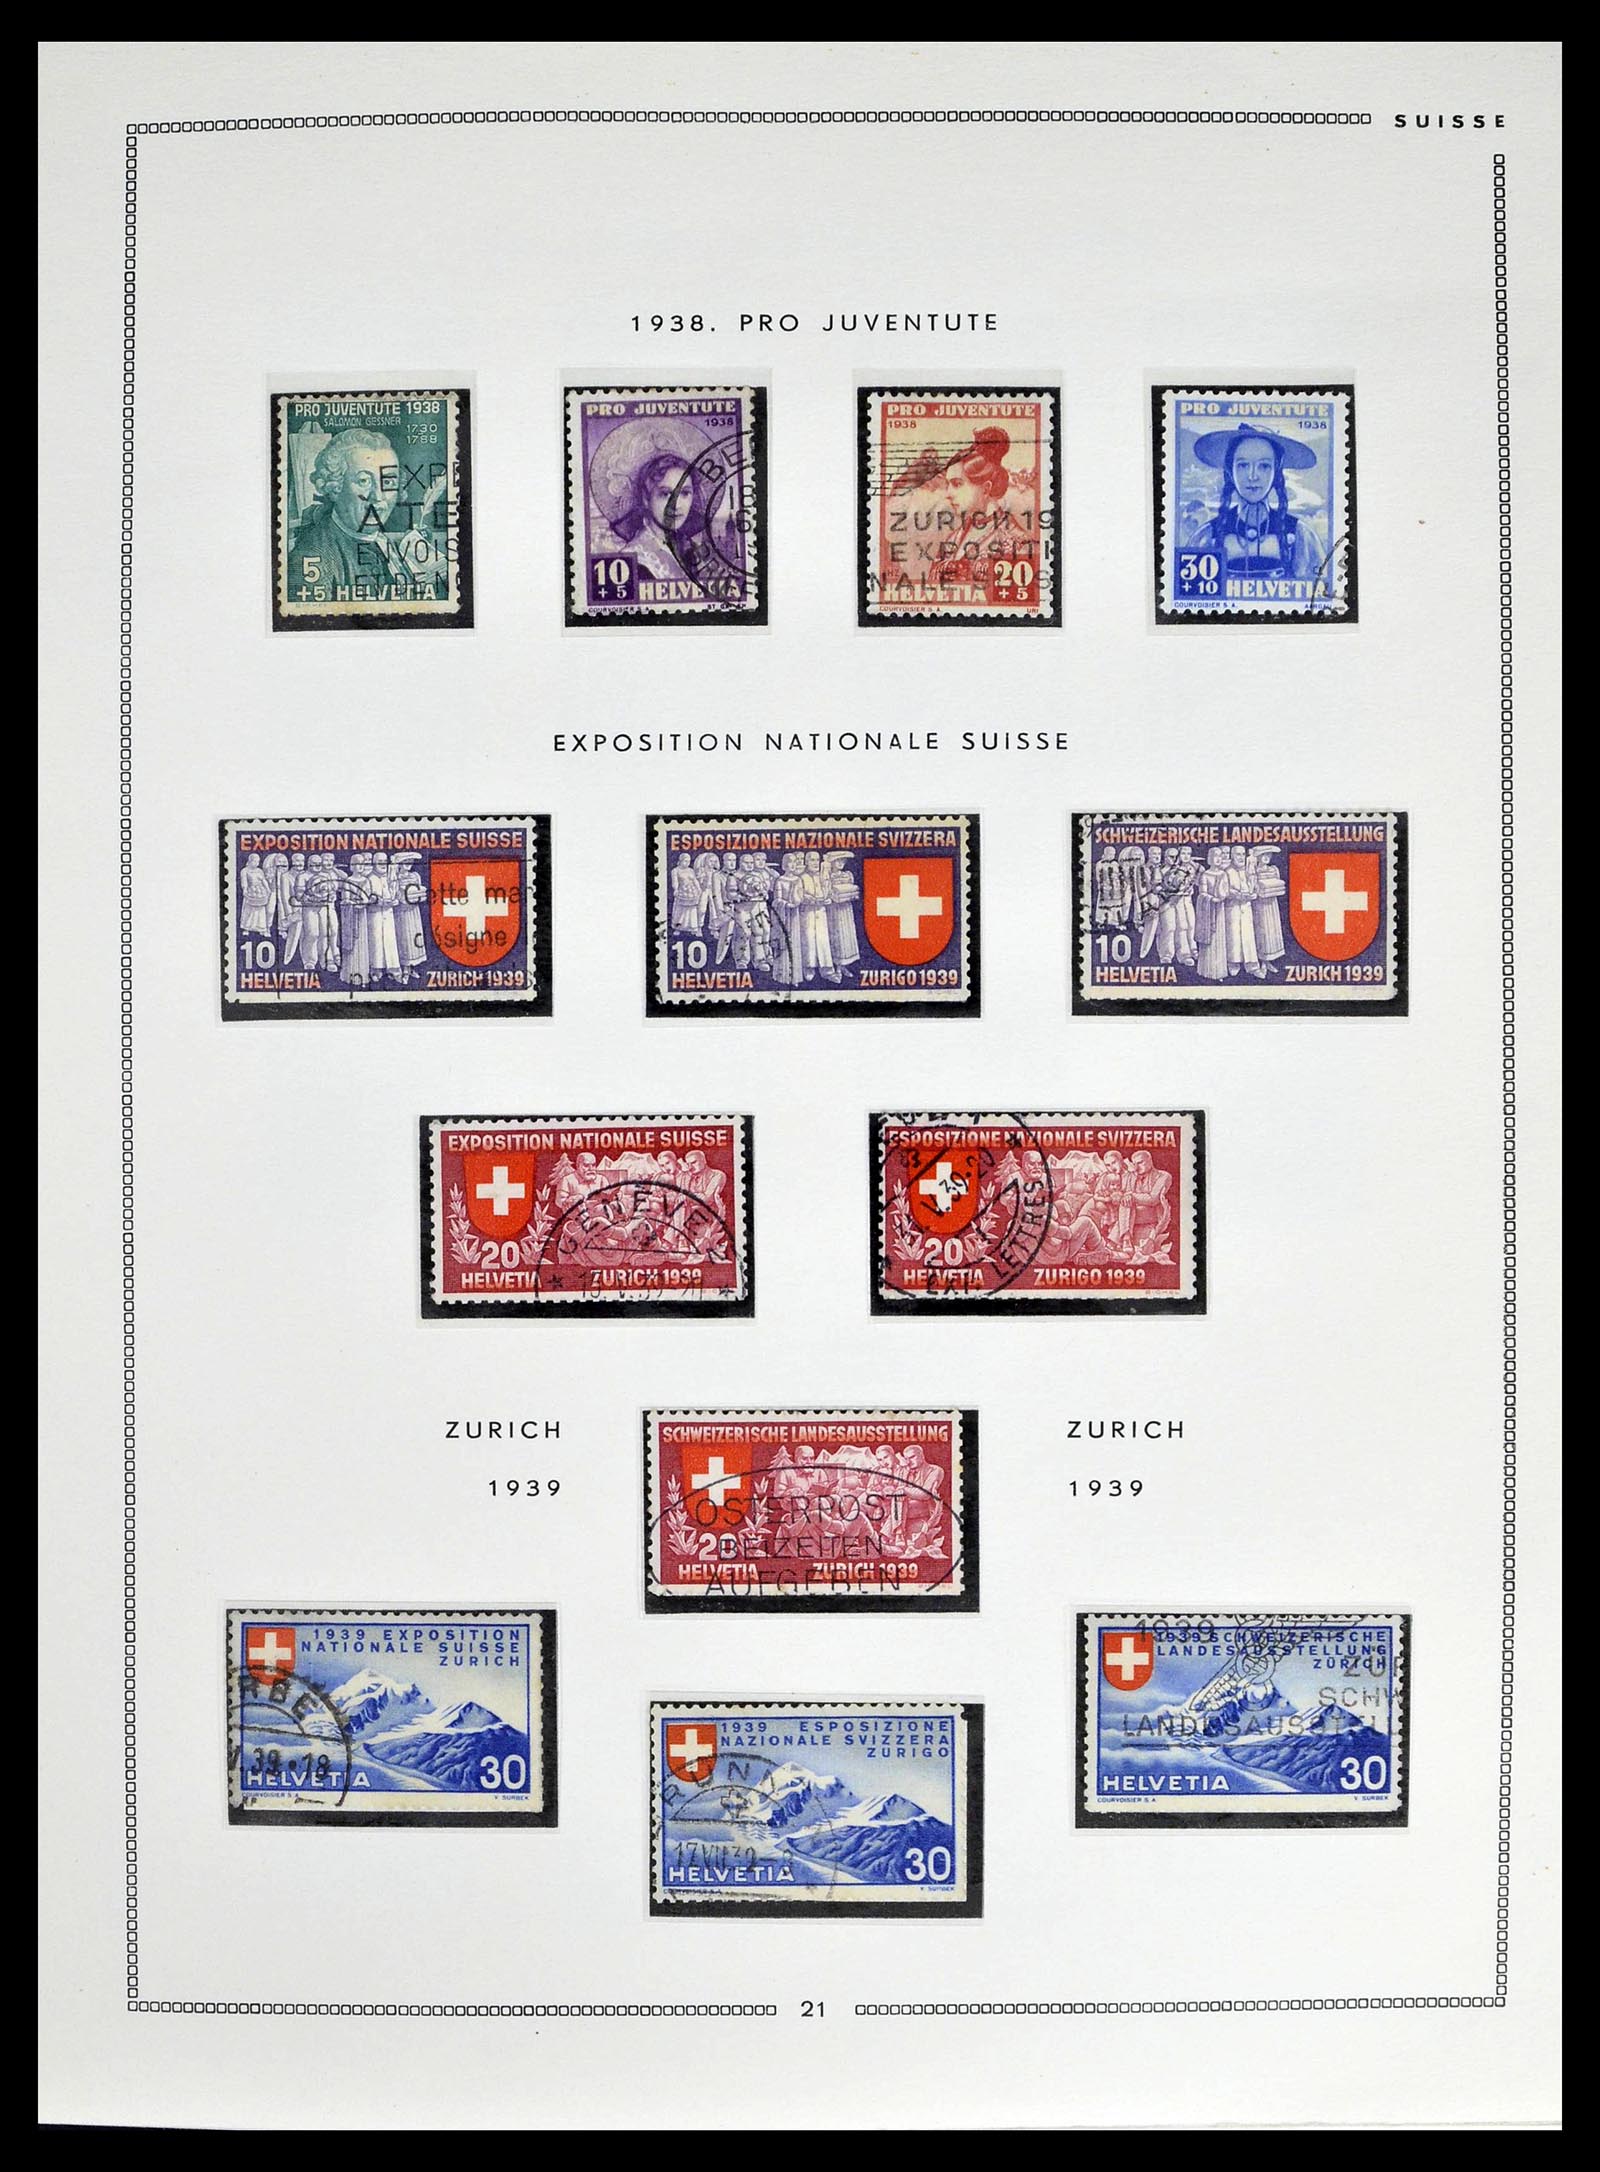 39094 0020 - Stamp collection 39094 Switzerland 1850-2005.